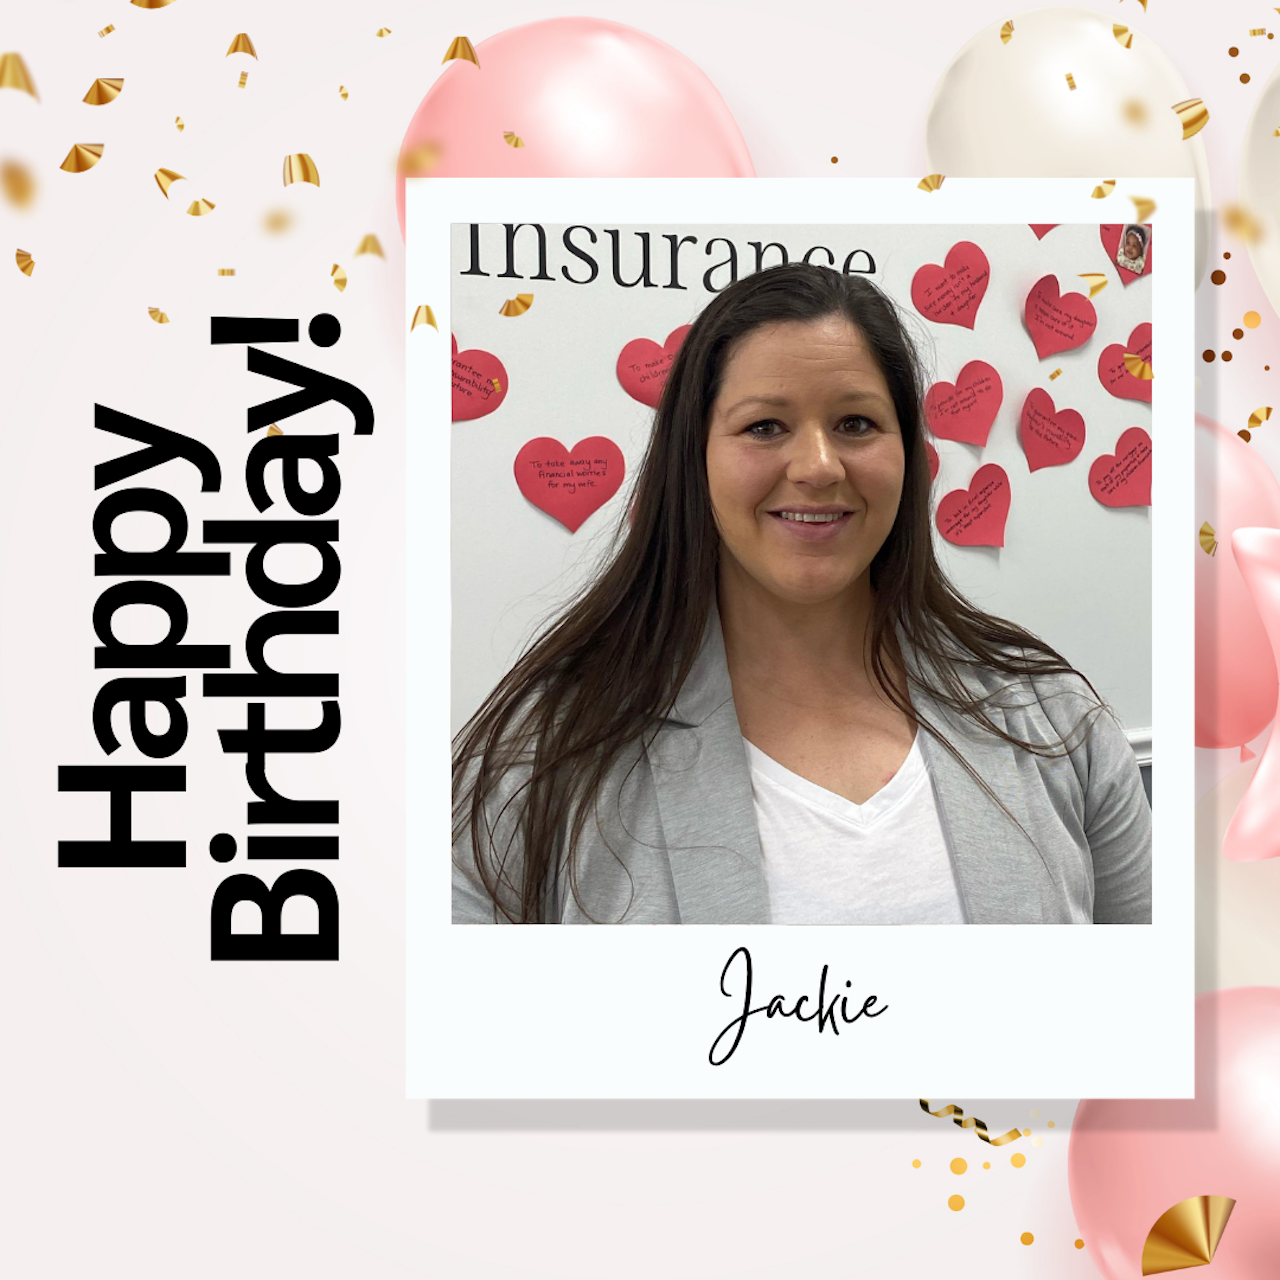 Happy birthday, Jackie! Kim Benton - State Farm Insurance Agent Millsboro (302)934-9393